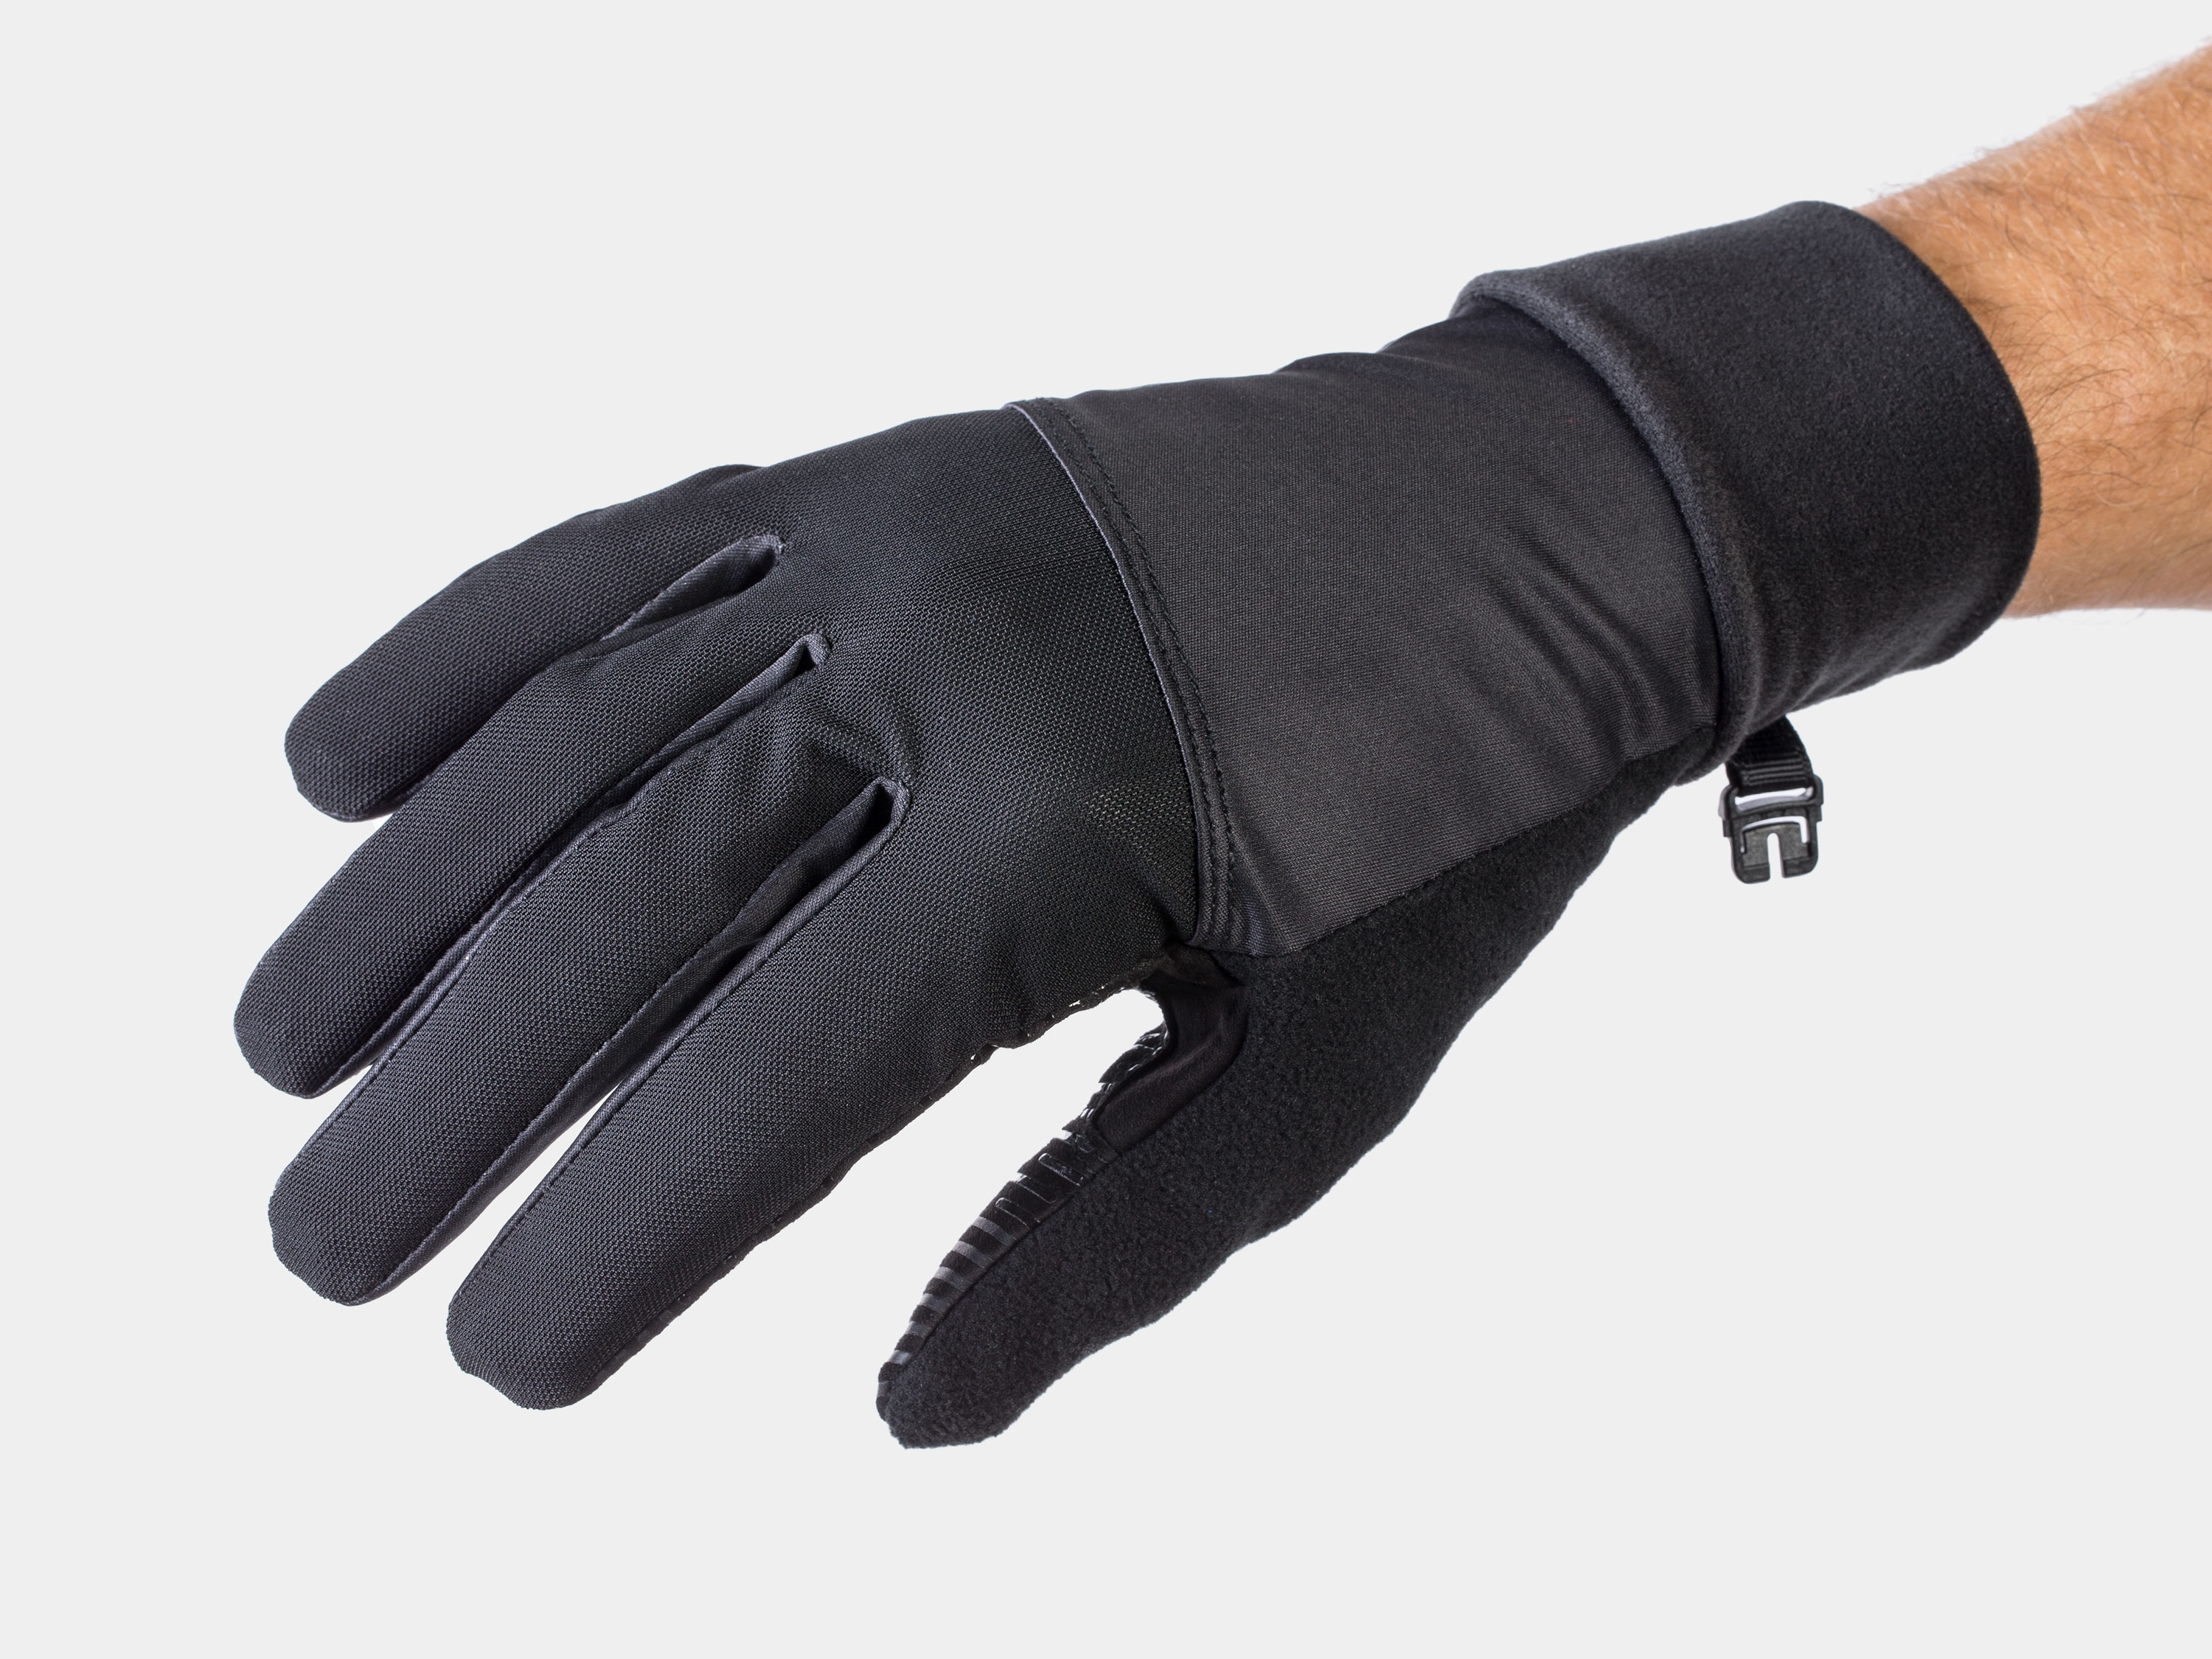 mountain bike gloves australia